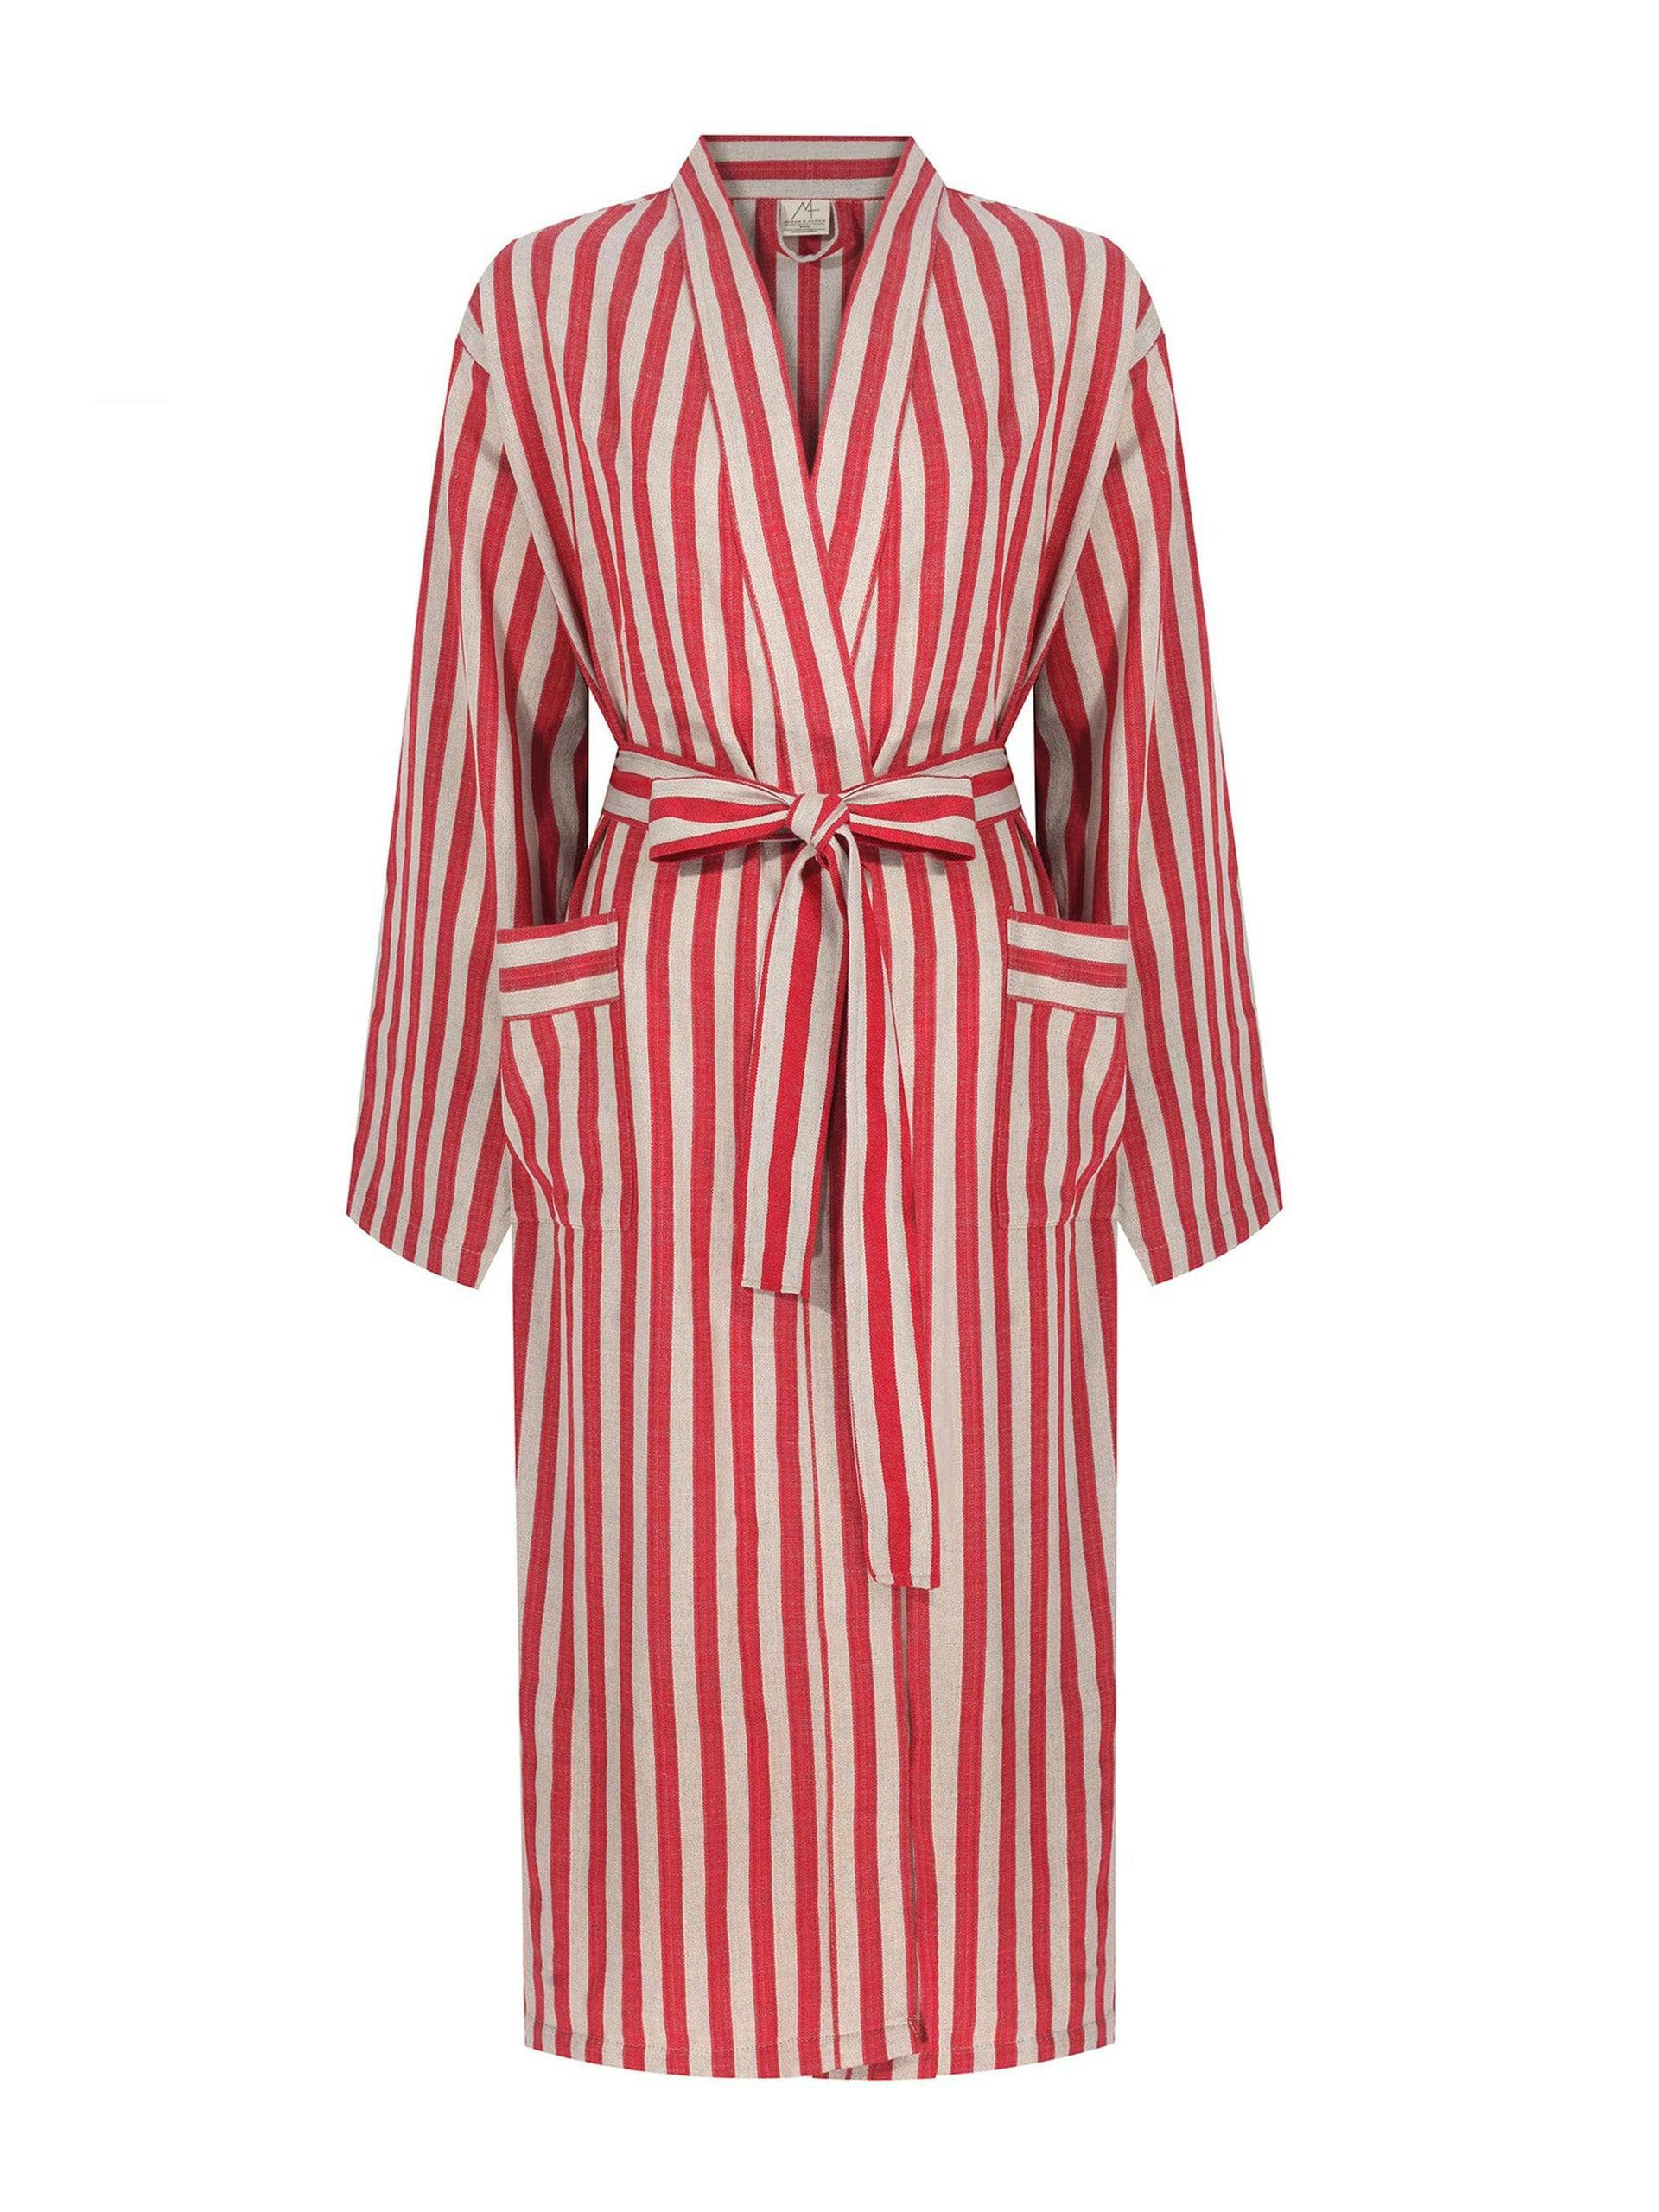 Striped red robe